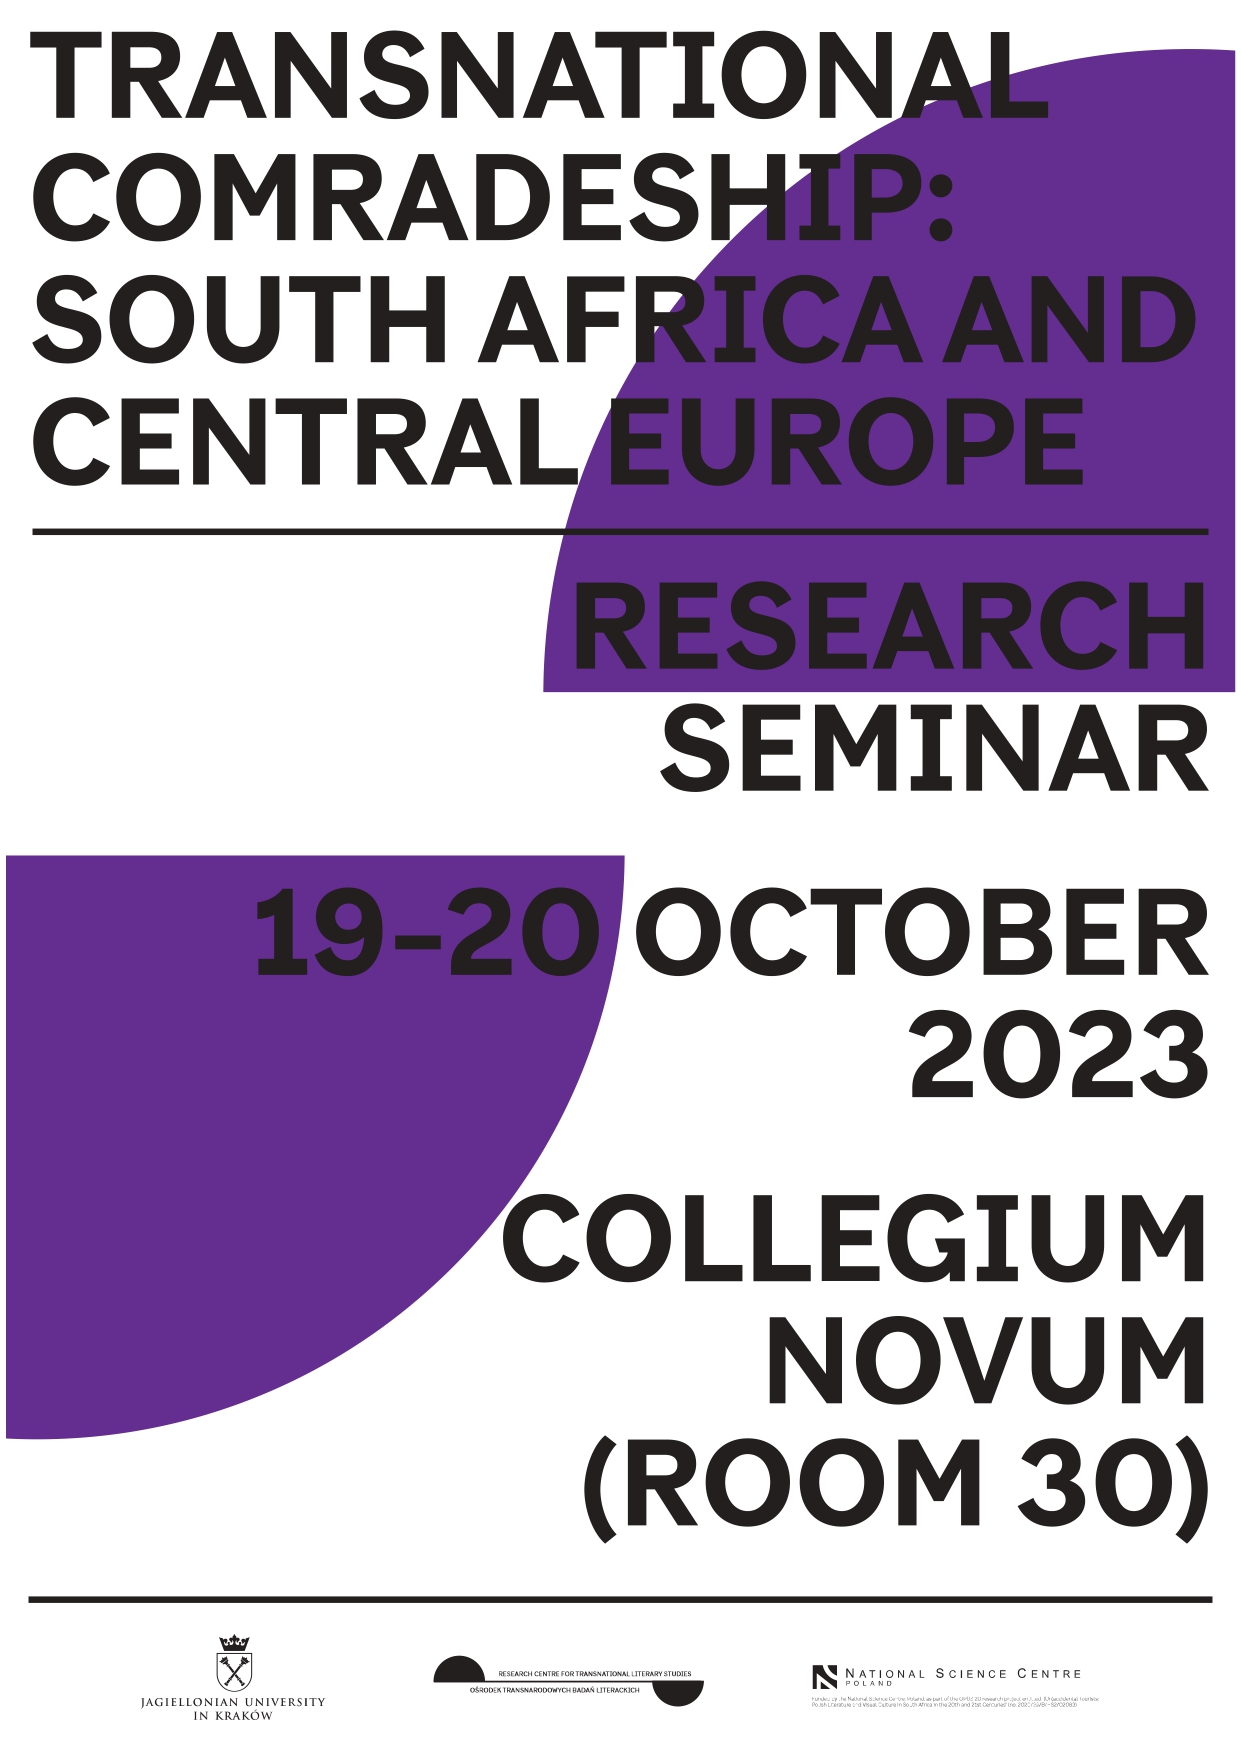 Plakat seminarium badawczego z napisami "Transnational Comradeship: South Africa and Central Europe Research Seminar", "19-20 October 2023", "Collegium Novum (Room 30)"